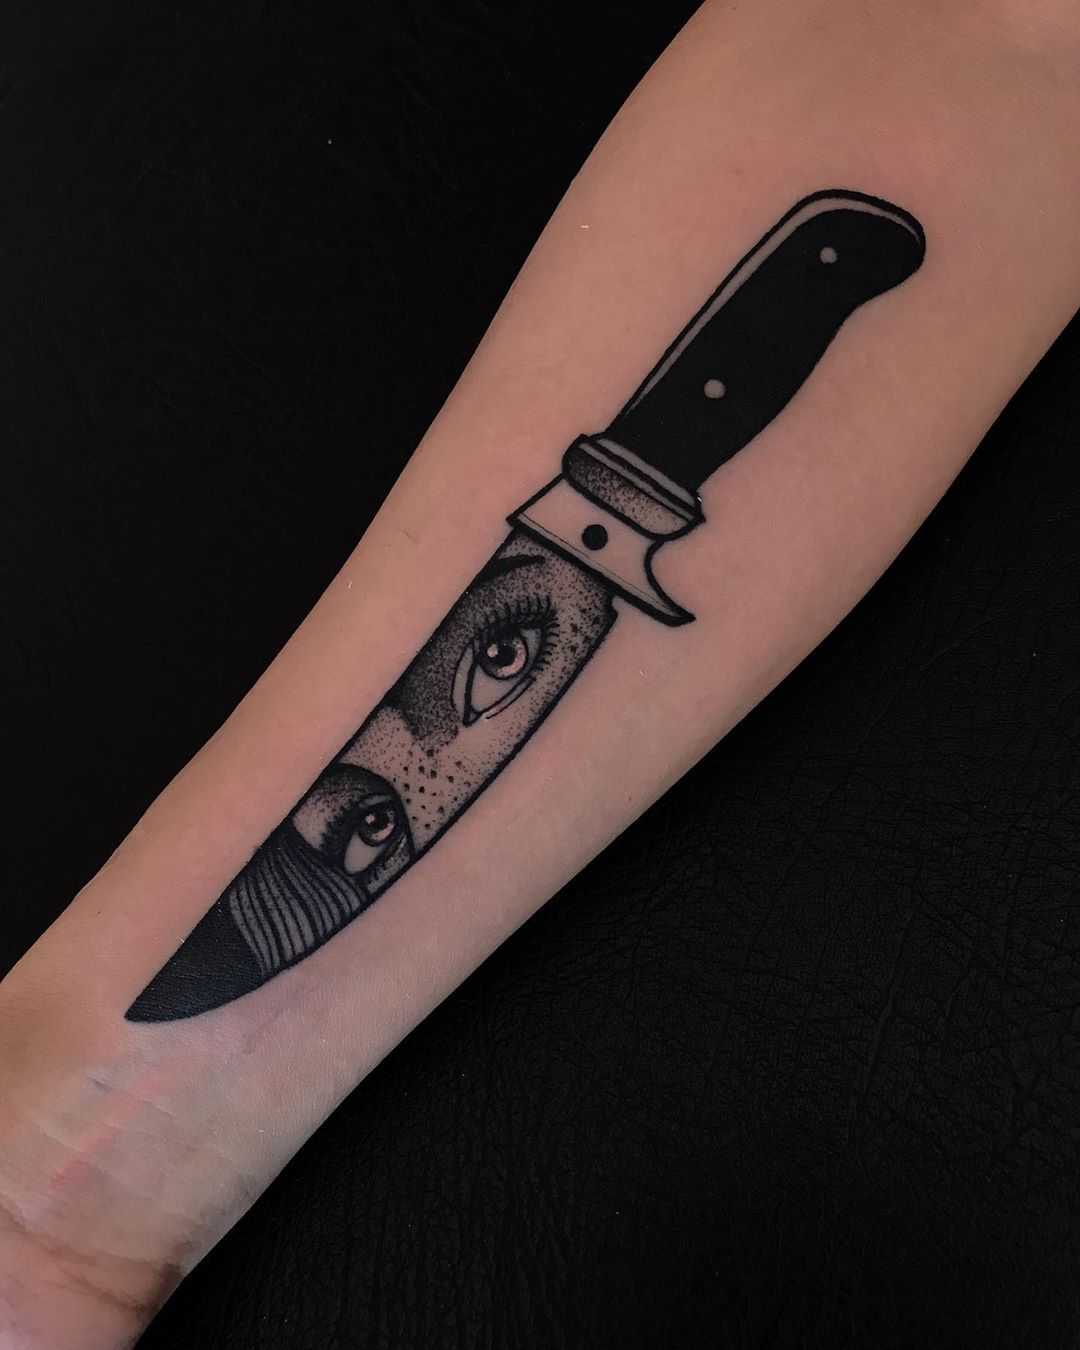 Knife by tattooist Alejo GMZ